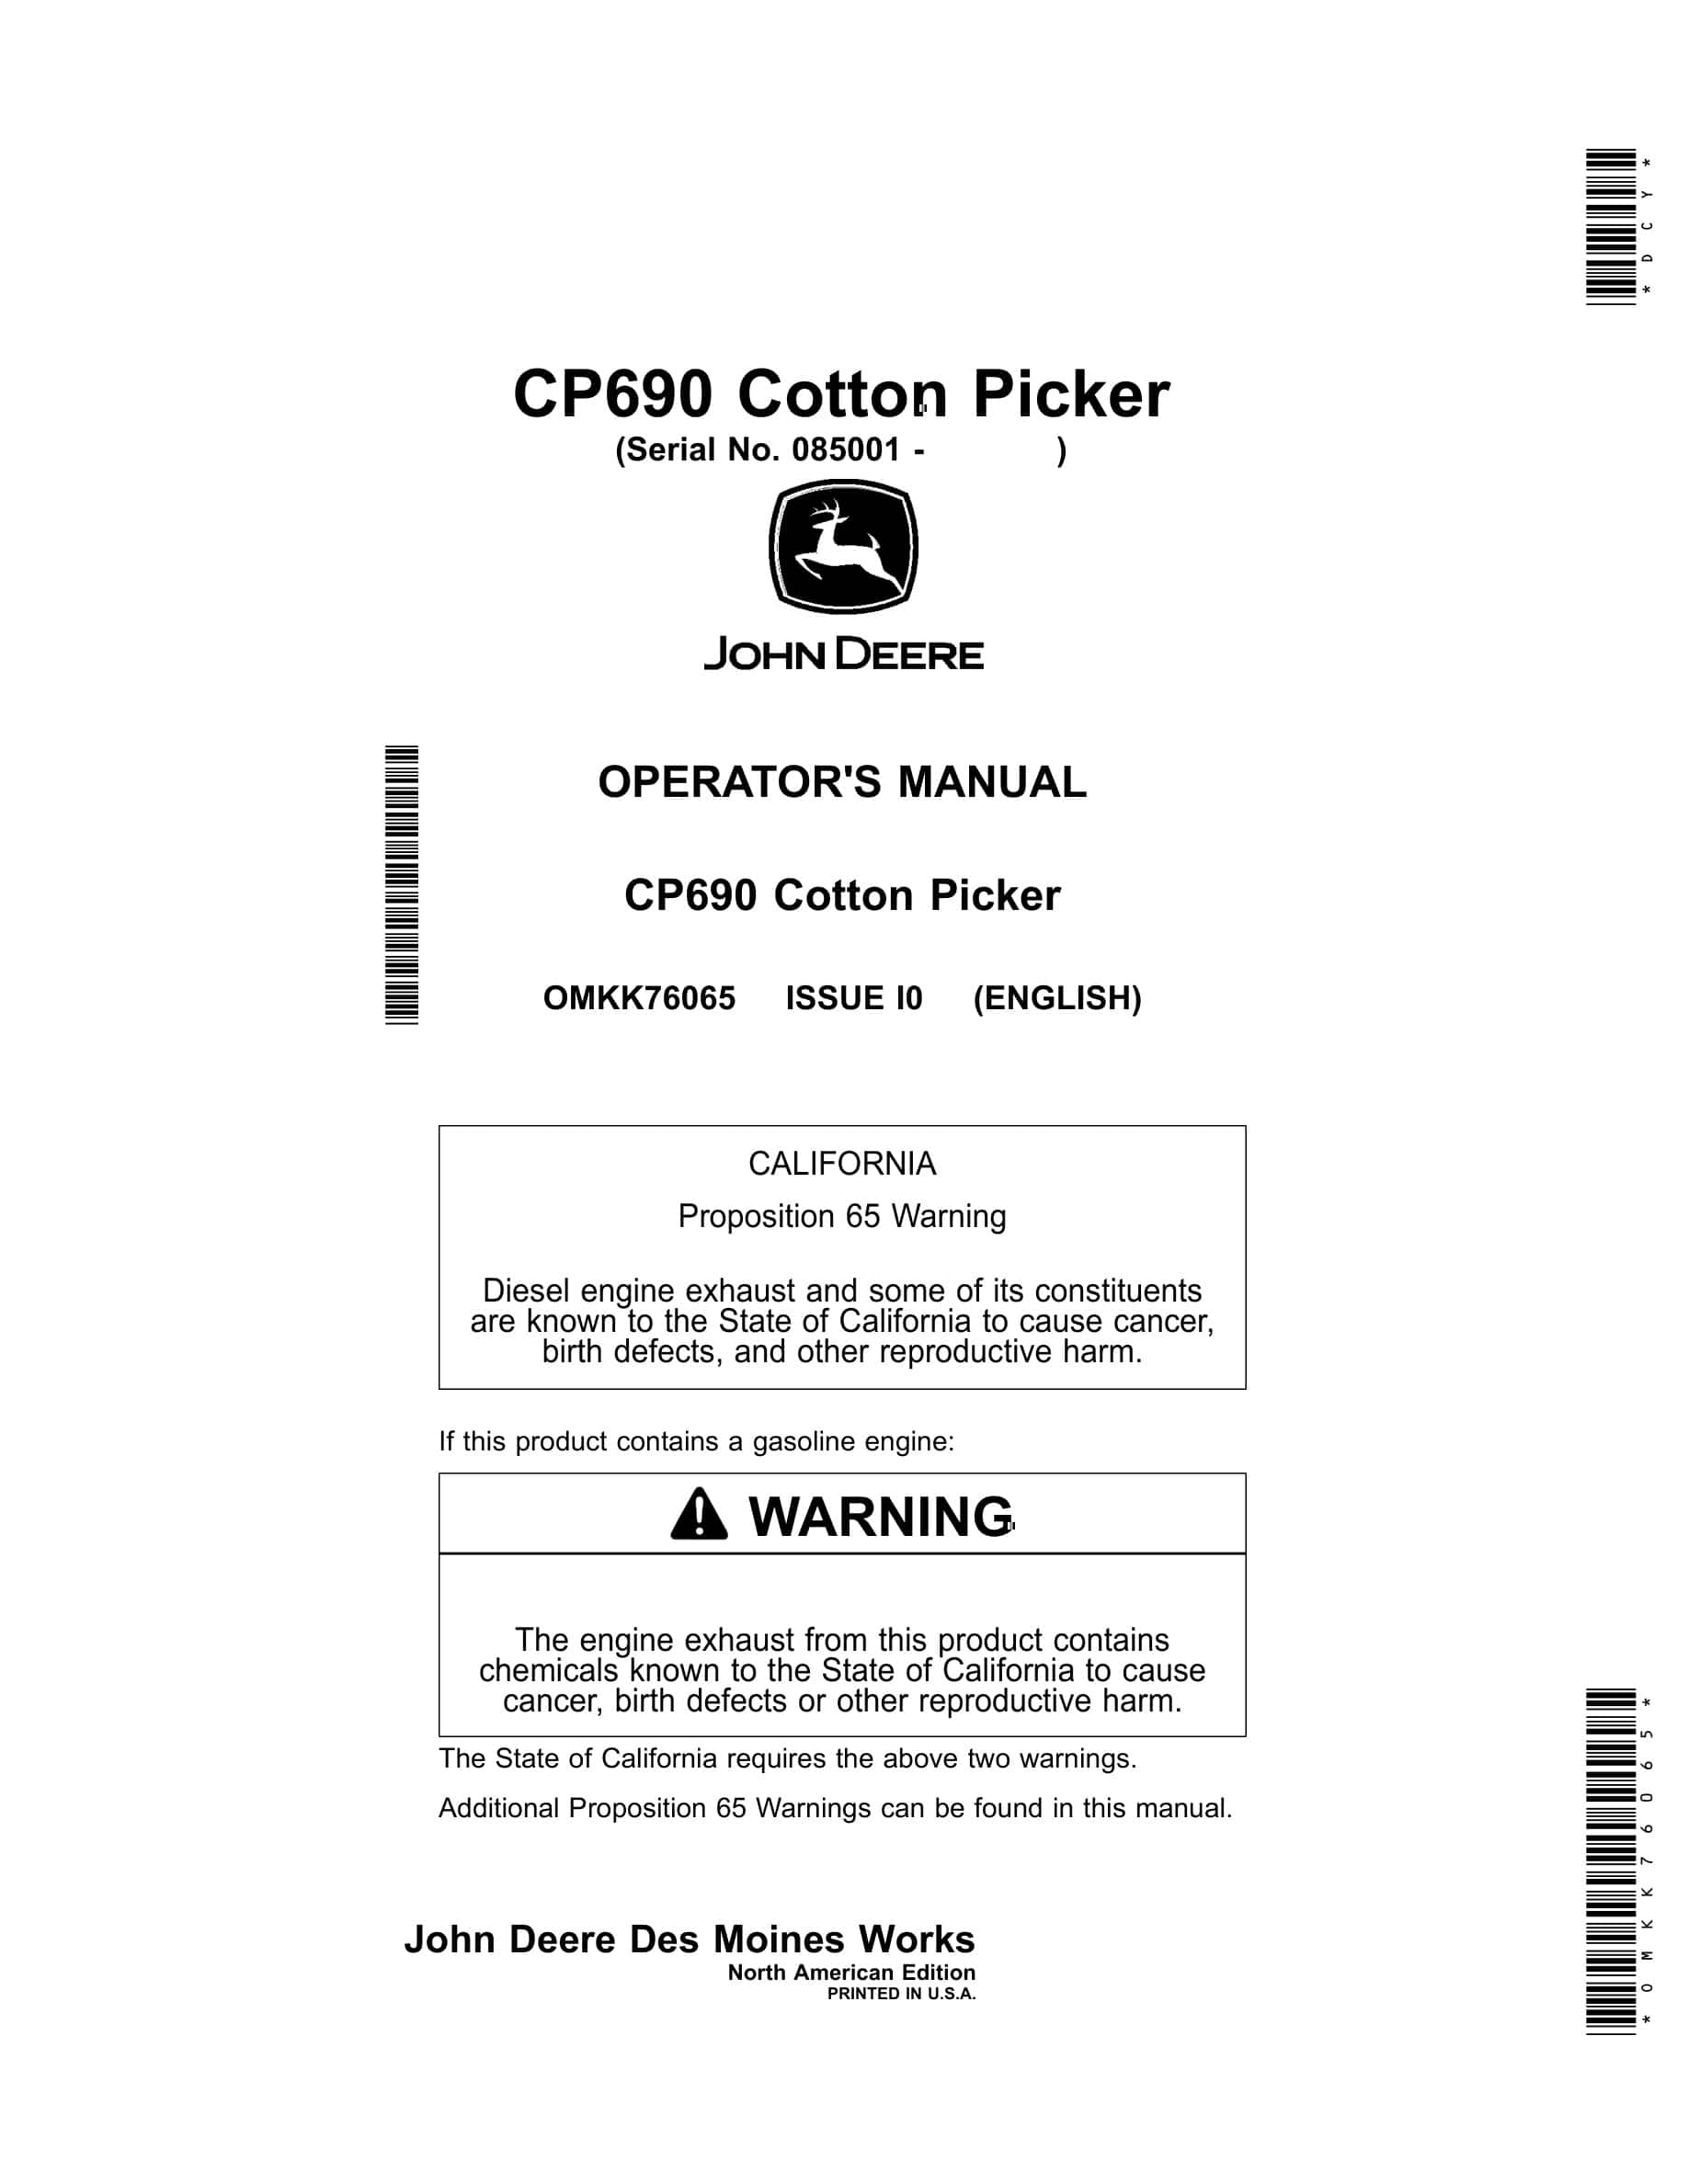 John Deere CP690 Cotton Picker Operator Manual OMKK76065-1